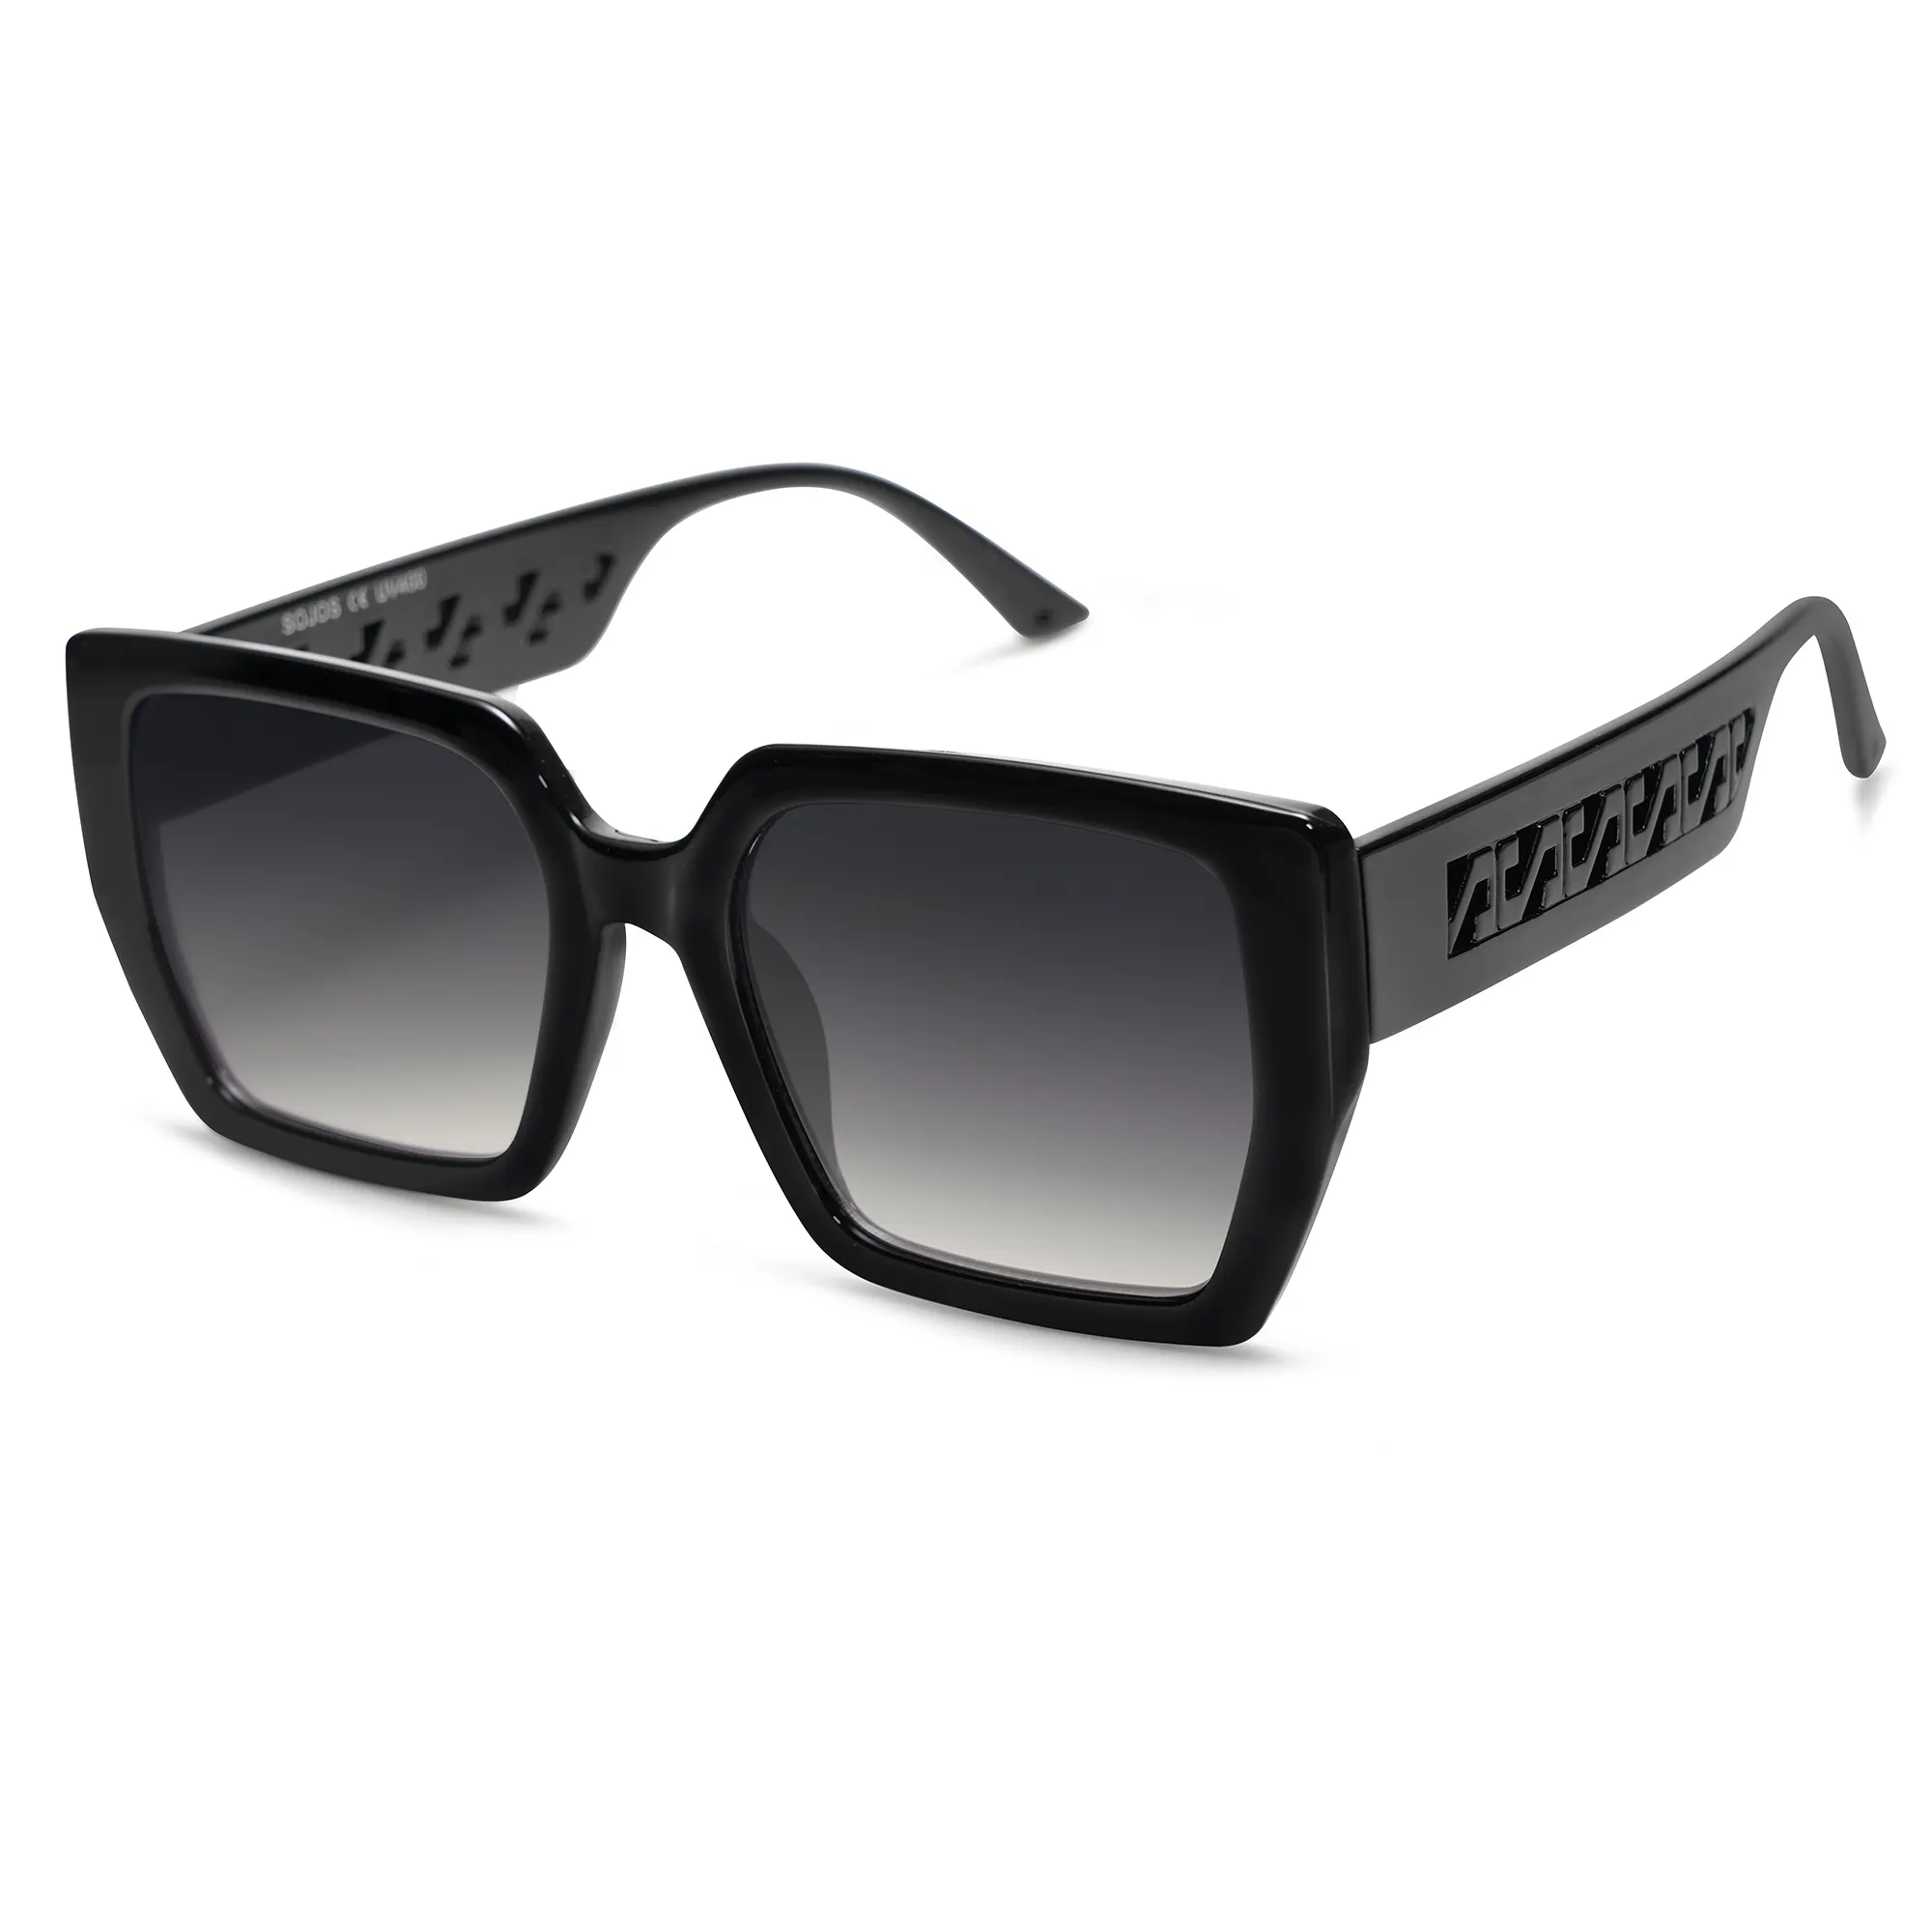 Vanlinker Women Men Stylish Trendy Square Shades Polarized Protective Sunglasses Unisex Plastic Sunglasses